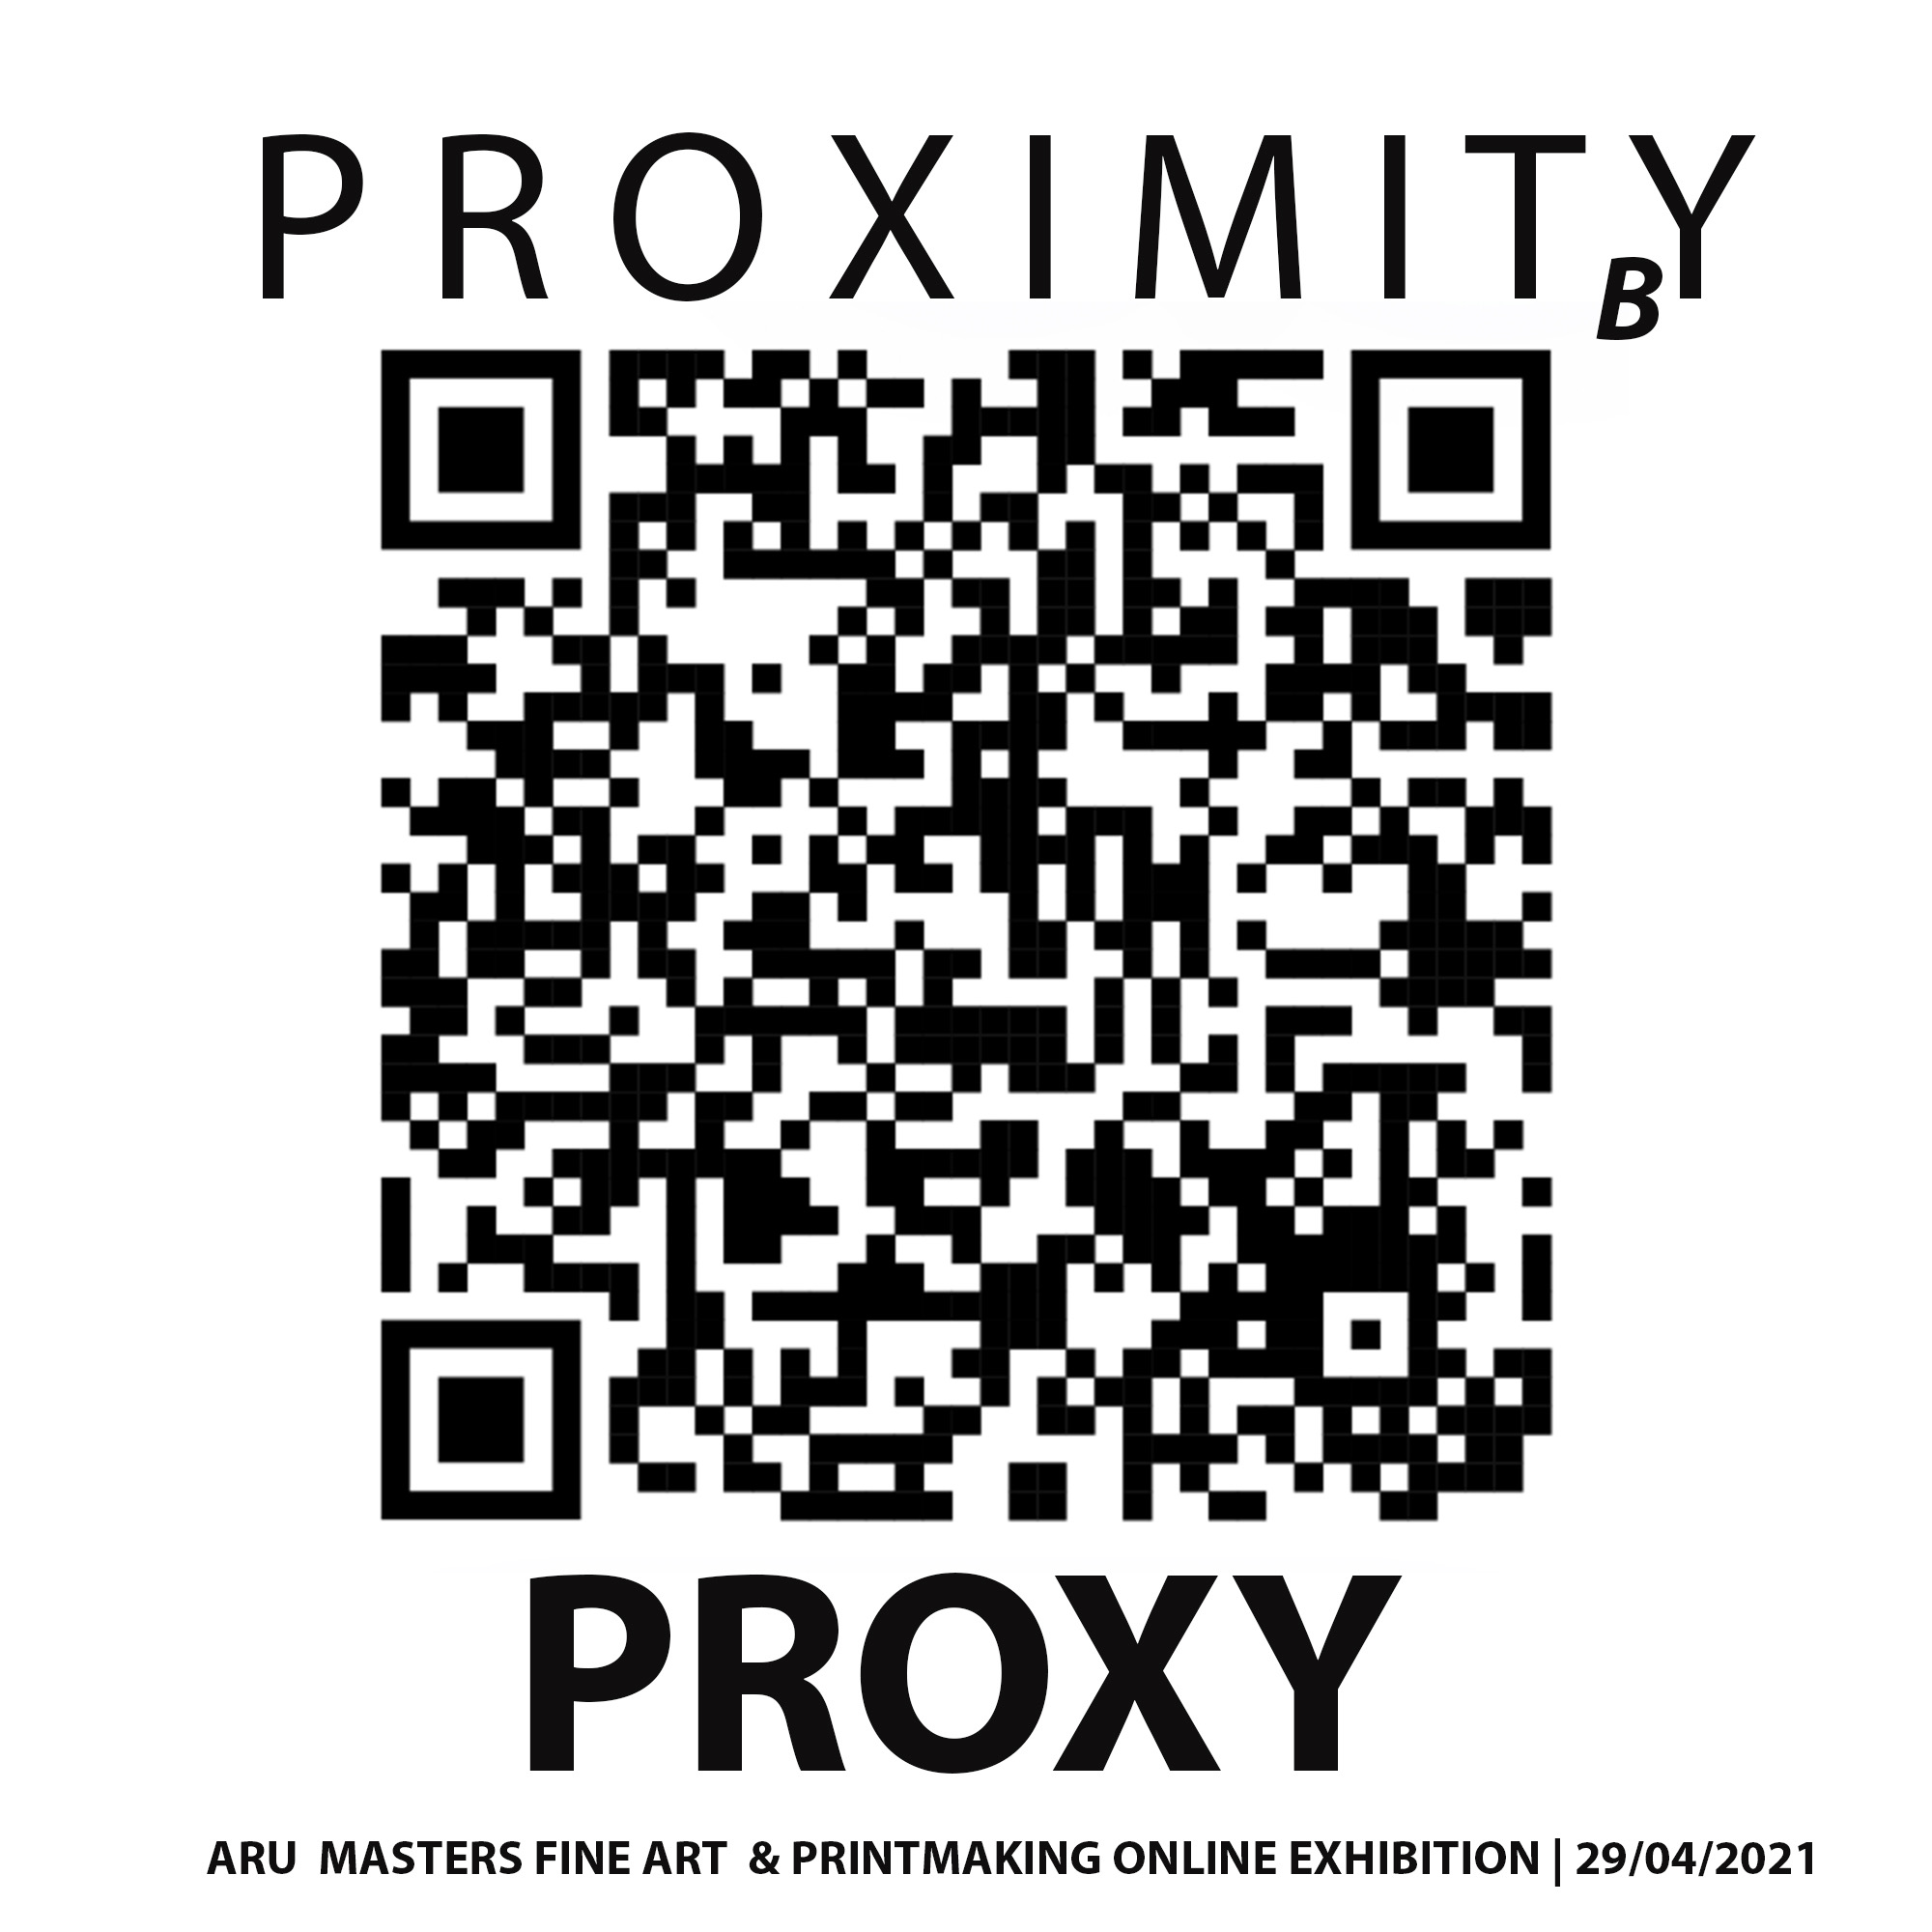 Proximity by Proxy QR Code Exhibition Artwork.